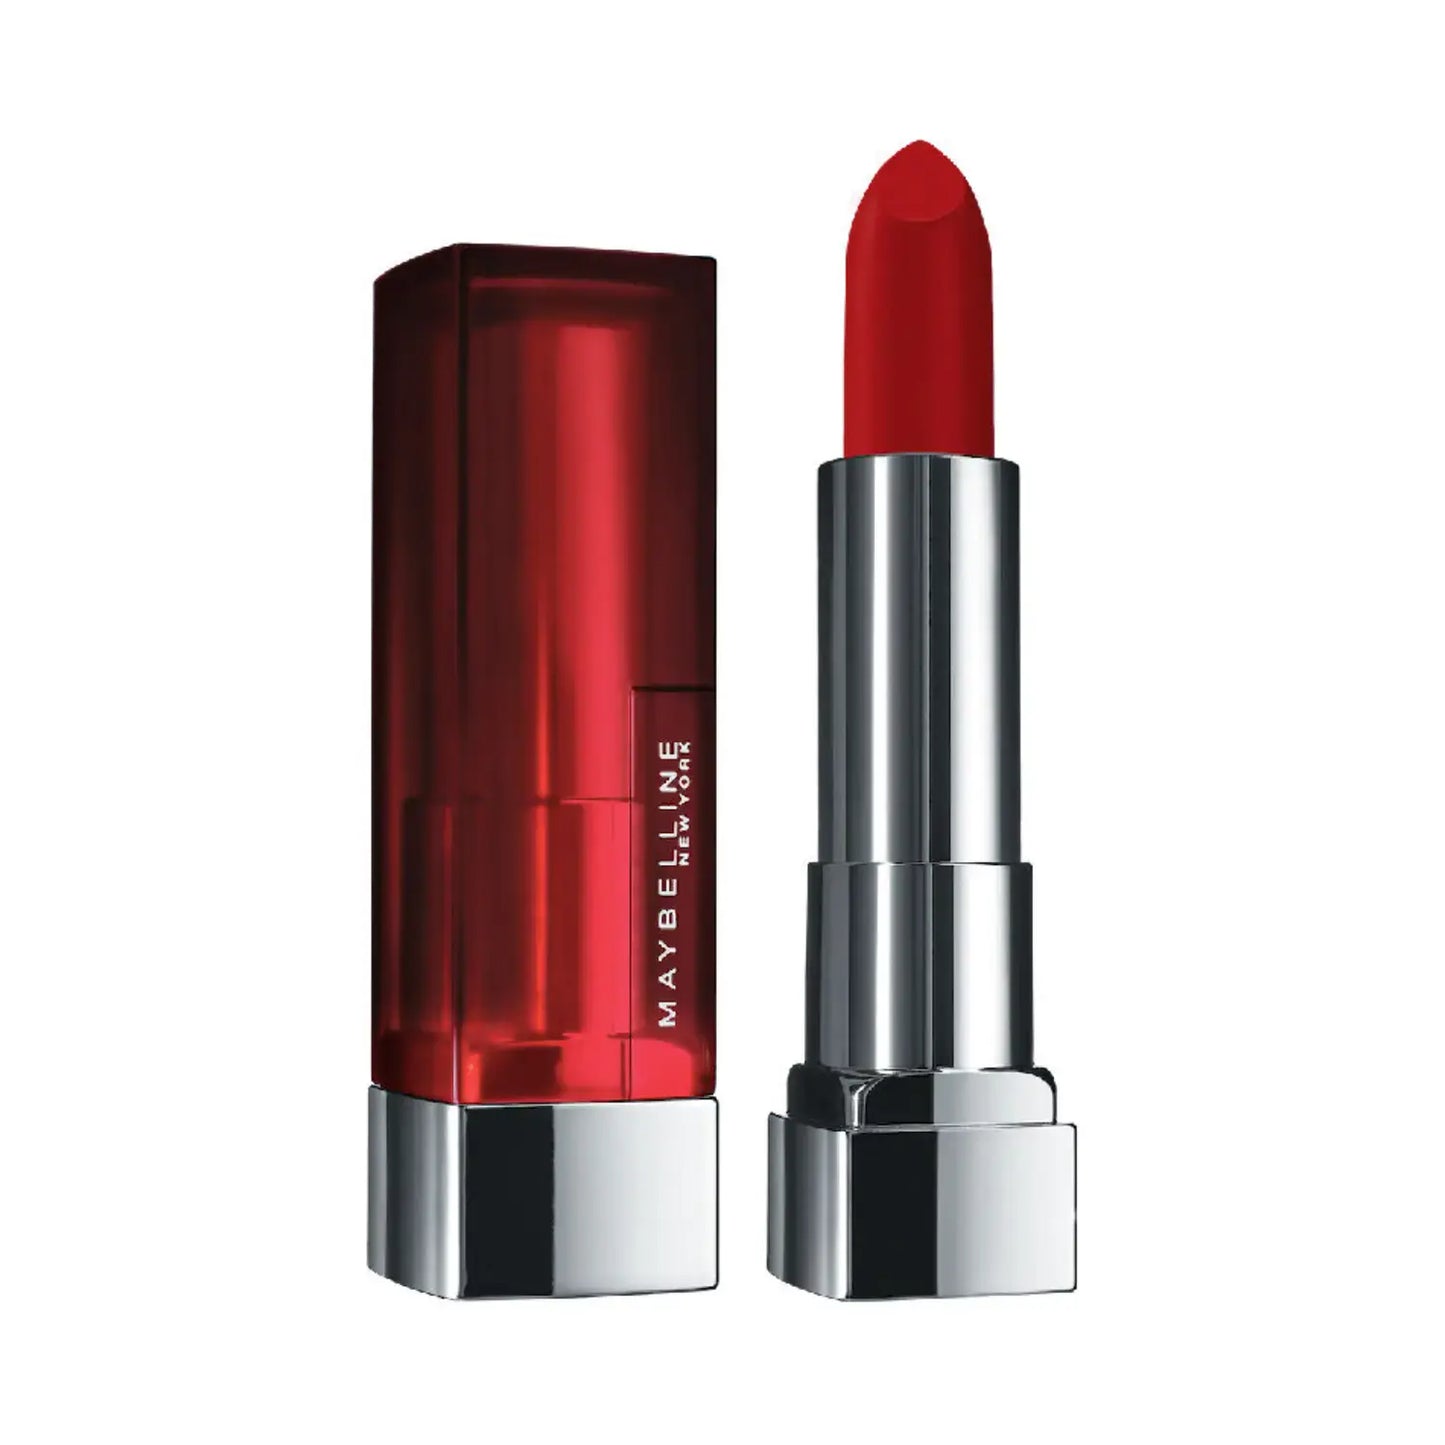 Maybelline New York Color Sensational Creamy Matte Lipstick - 690 Siren In Scarlet (3.9g)